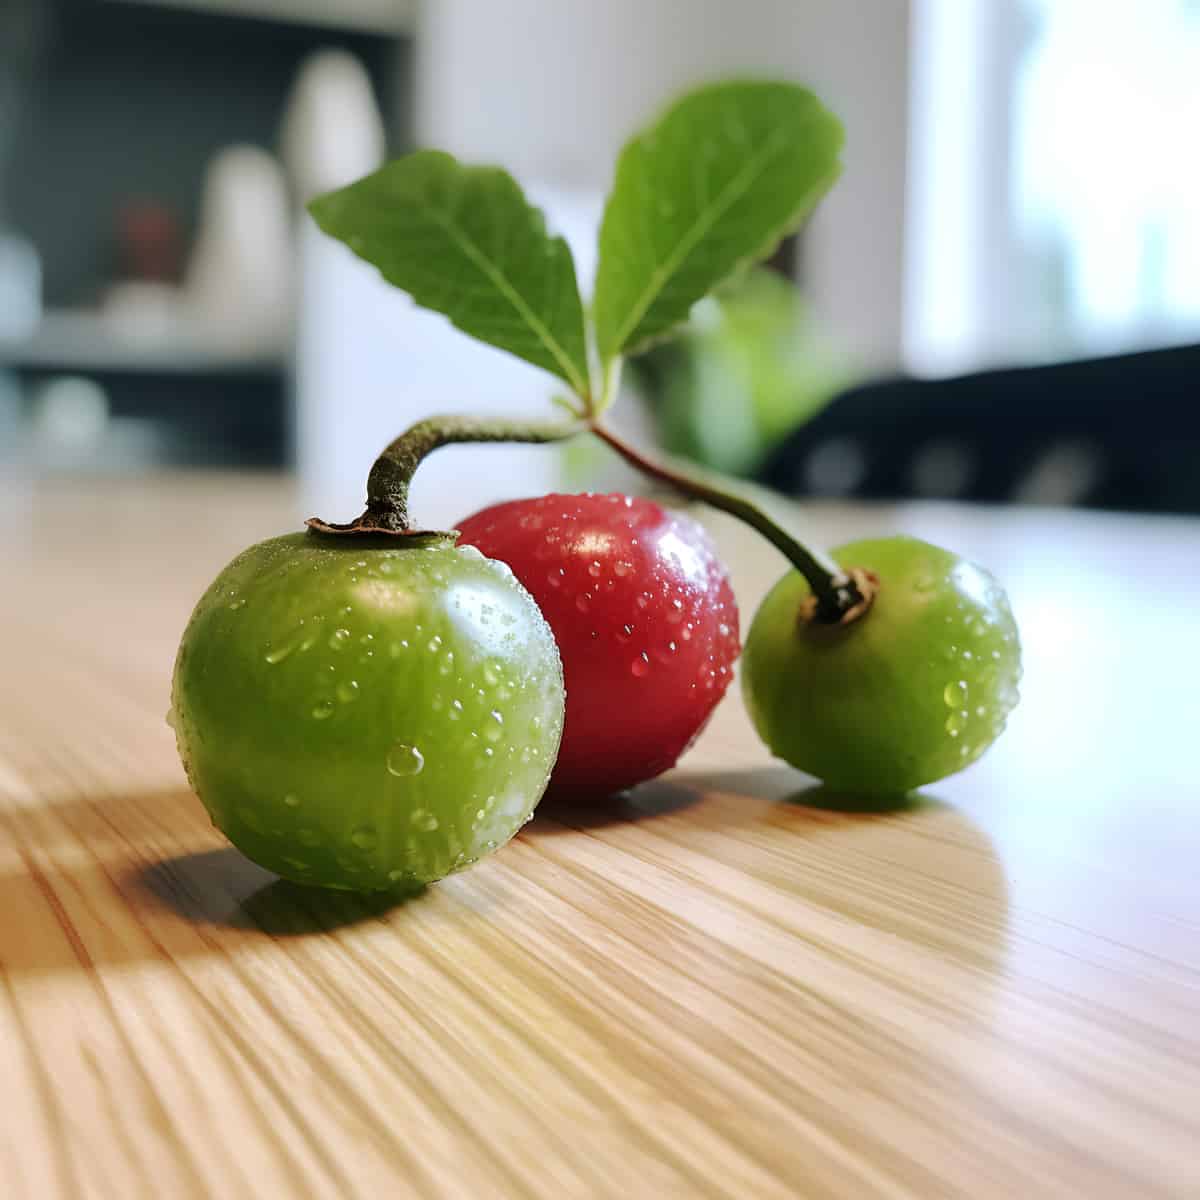 Calabur Fruit on a kitchen counter